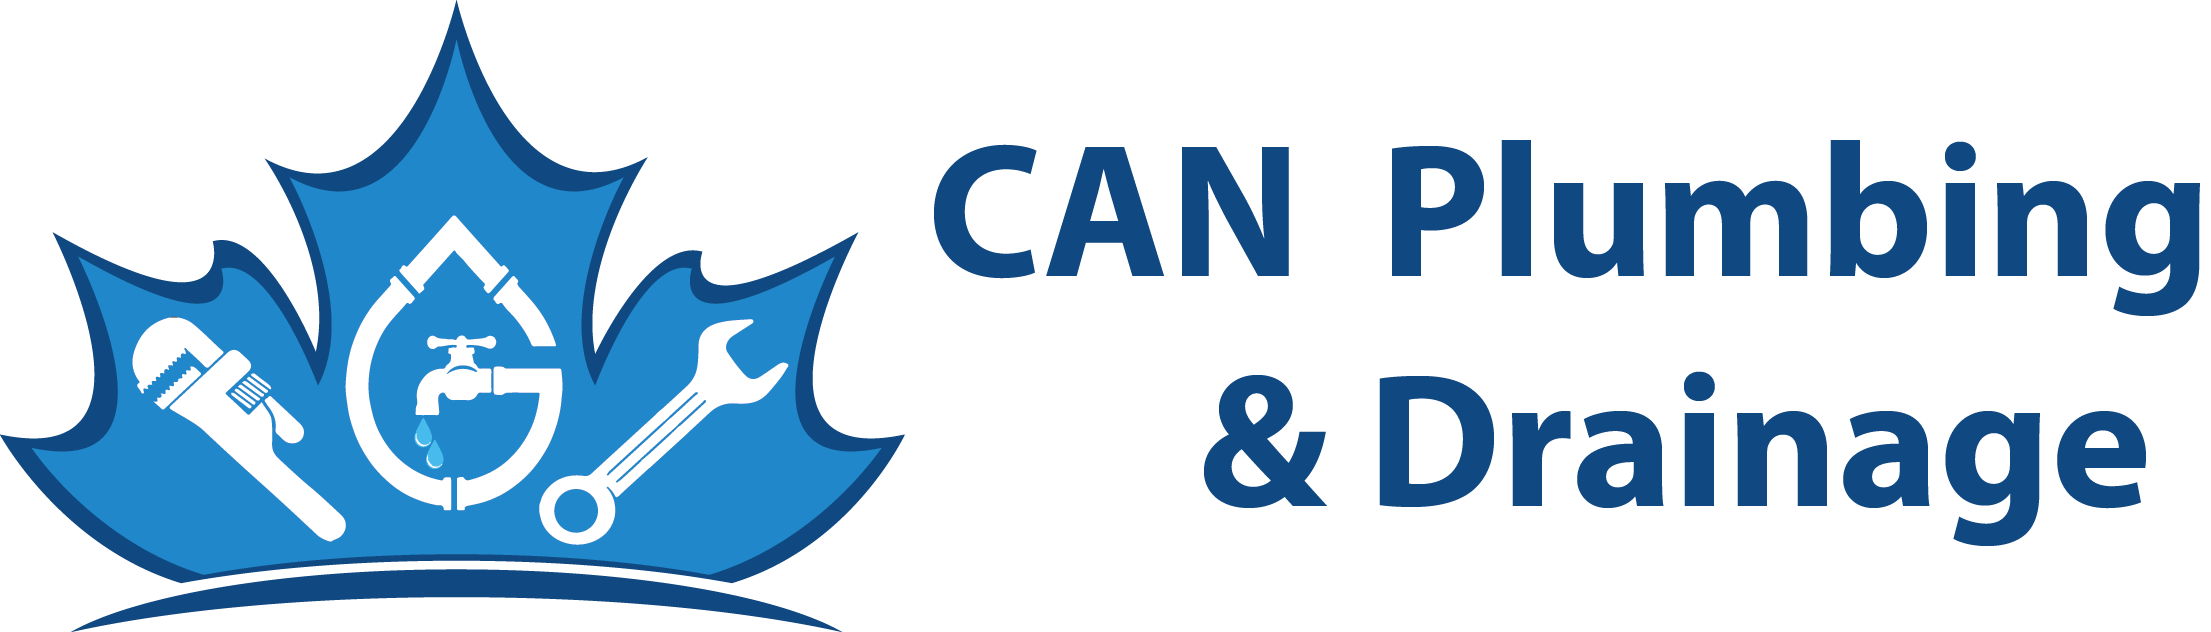 CAN Plumbing & Drainage Logo